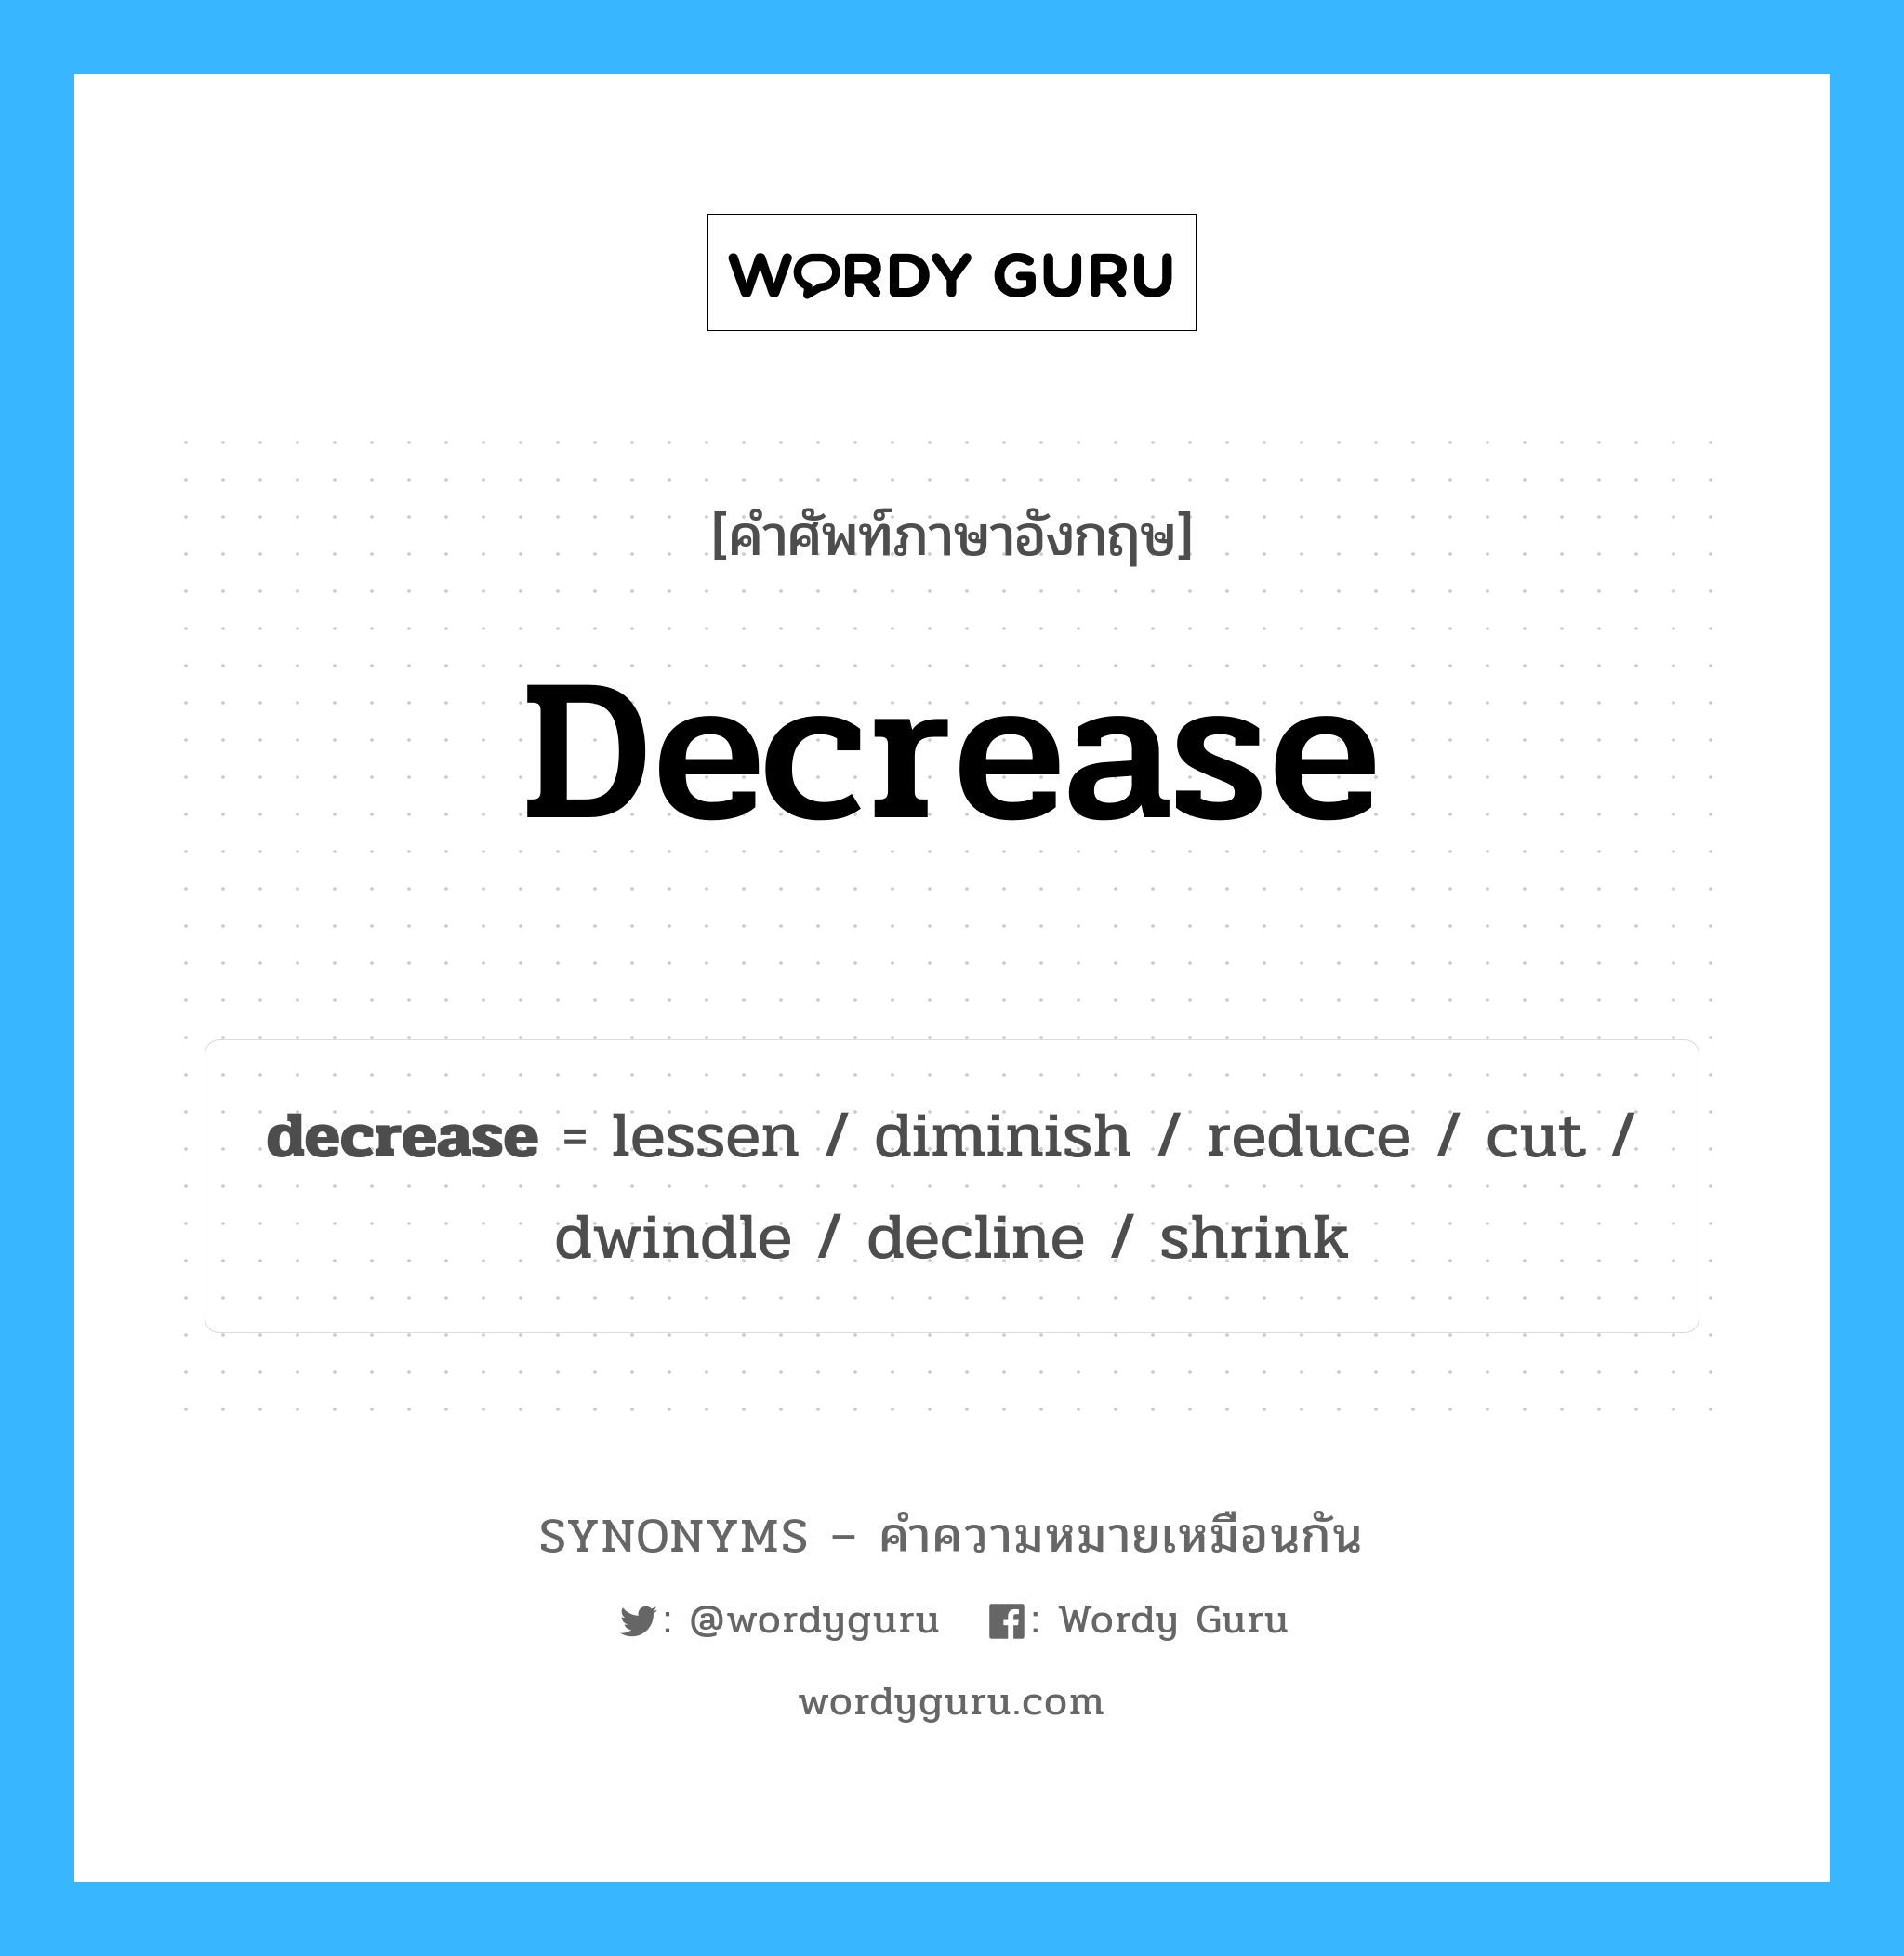 shrink เป็นหนึ่งใน decrease และมีคำอื่น ๆ อีกดังนี้, คำศัพท์ภาษาอังกฤษ shrink ความหมายคล้ายกันกับ decrease แปลว่า ลดขนาด หมวด decrease